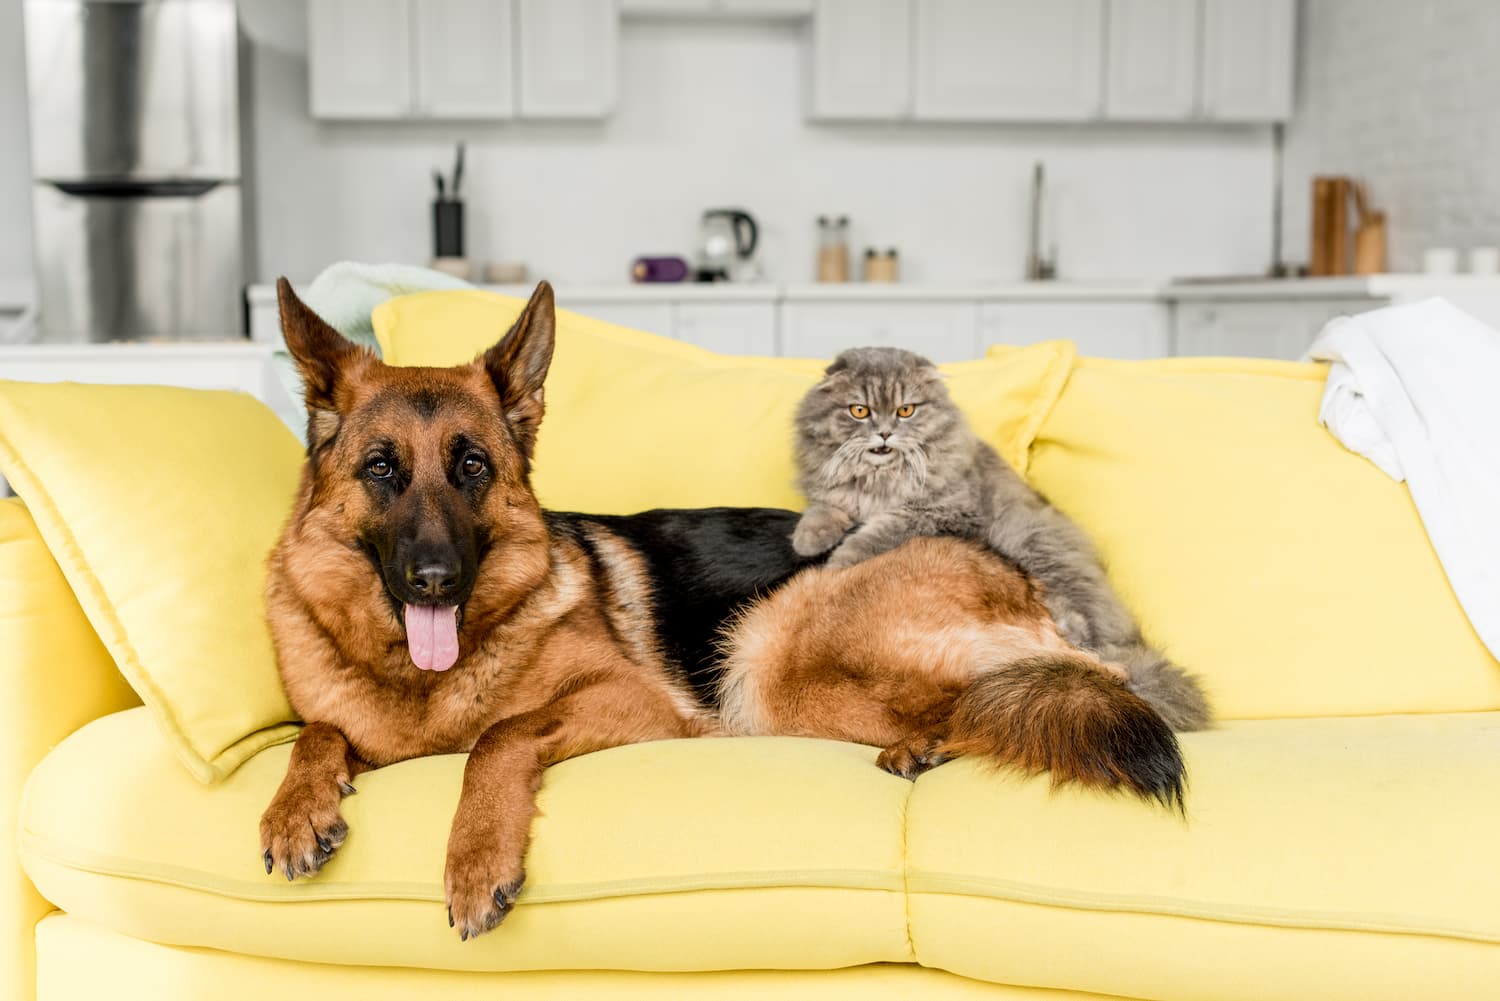 cute-and-grey-cat-and-dog-lying-on-yellow-sofa-in-2021-08-30-02-15-40-utc-1